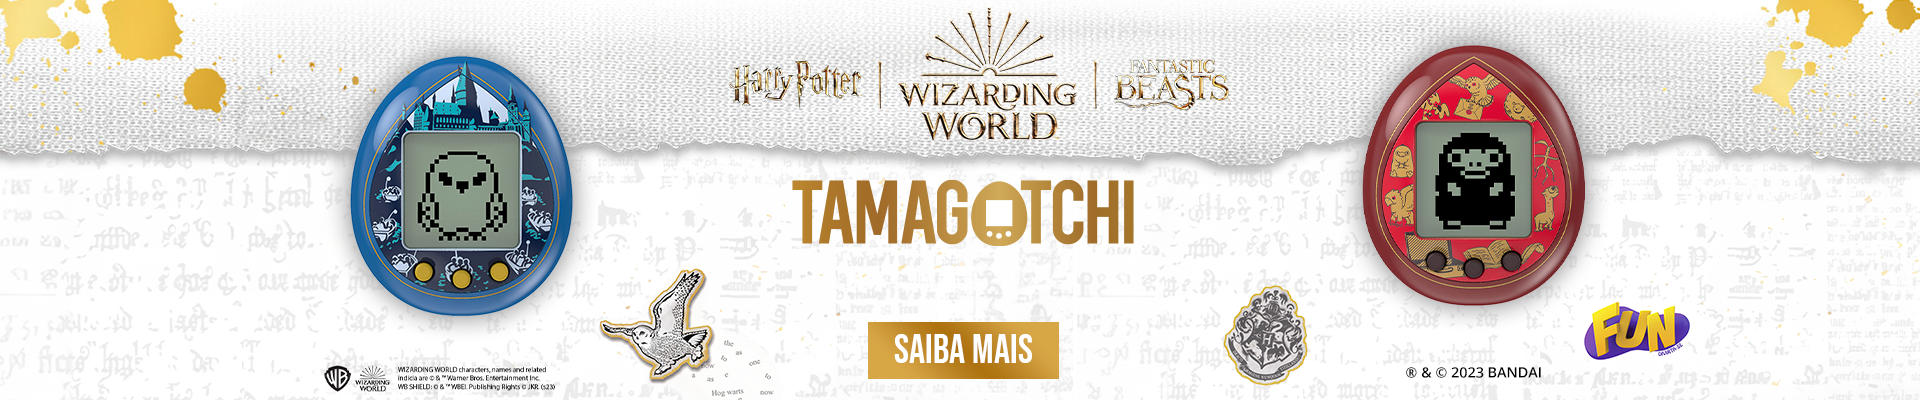 Tamagotchi Harry Potter